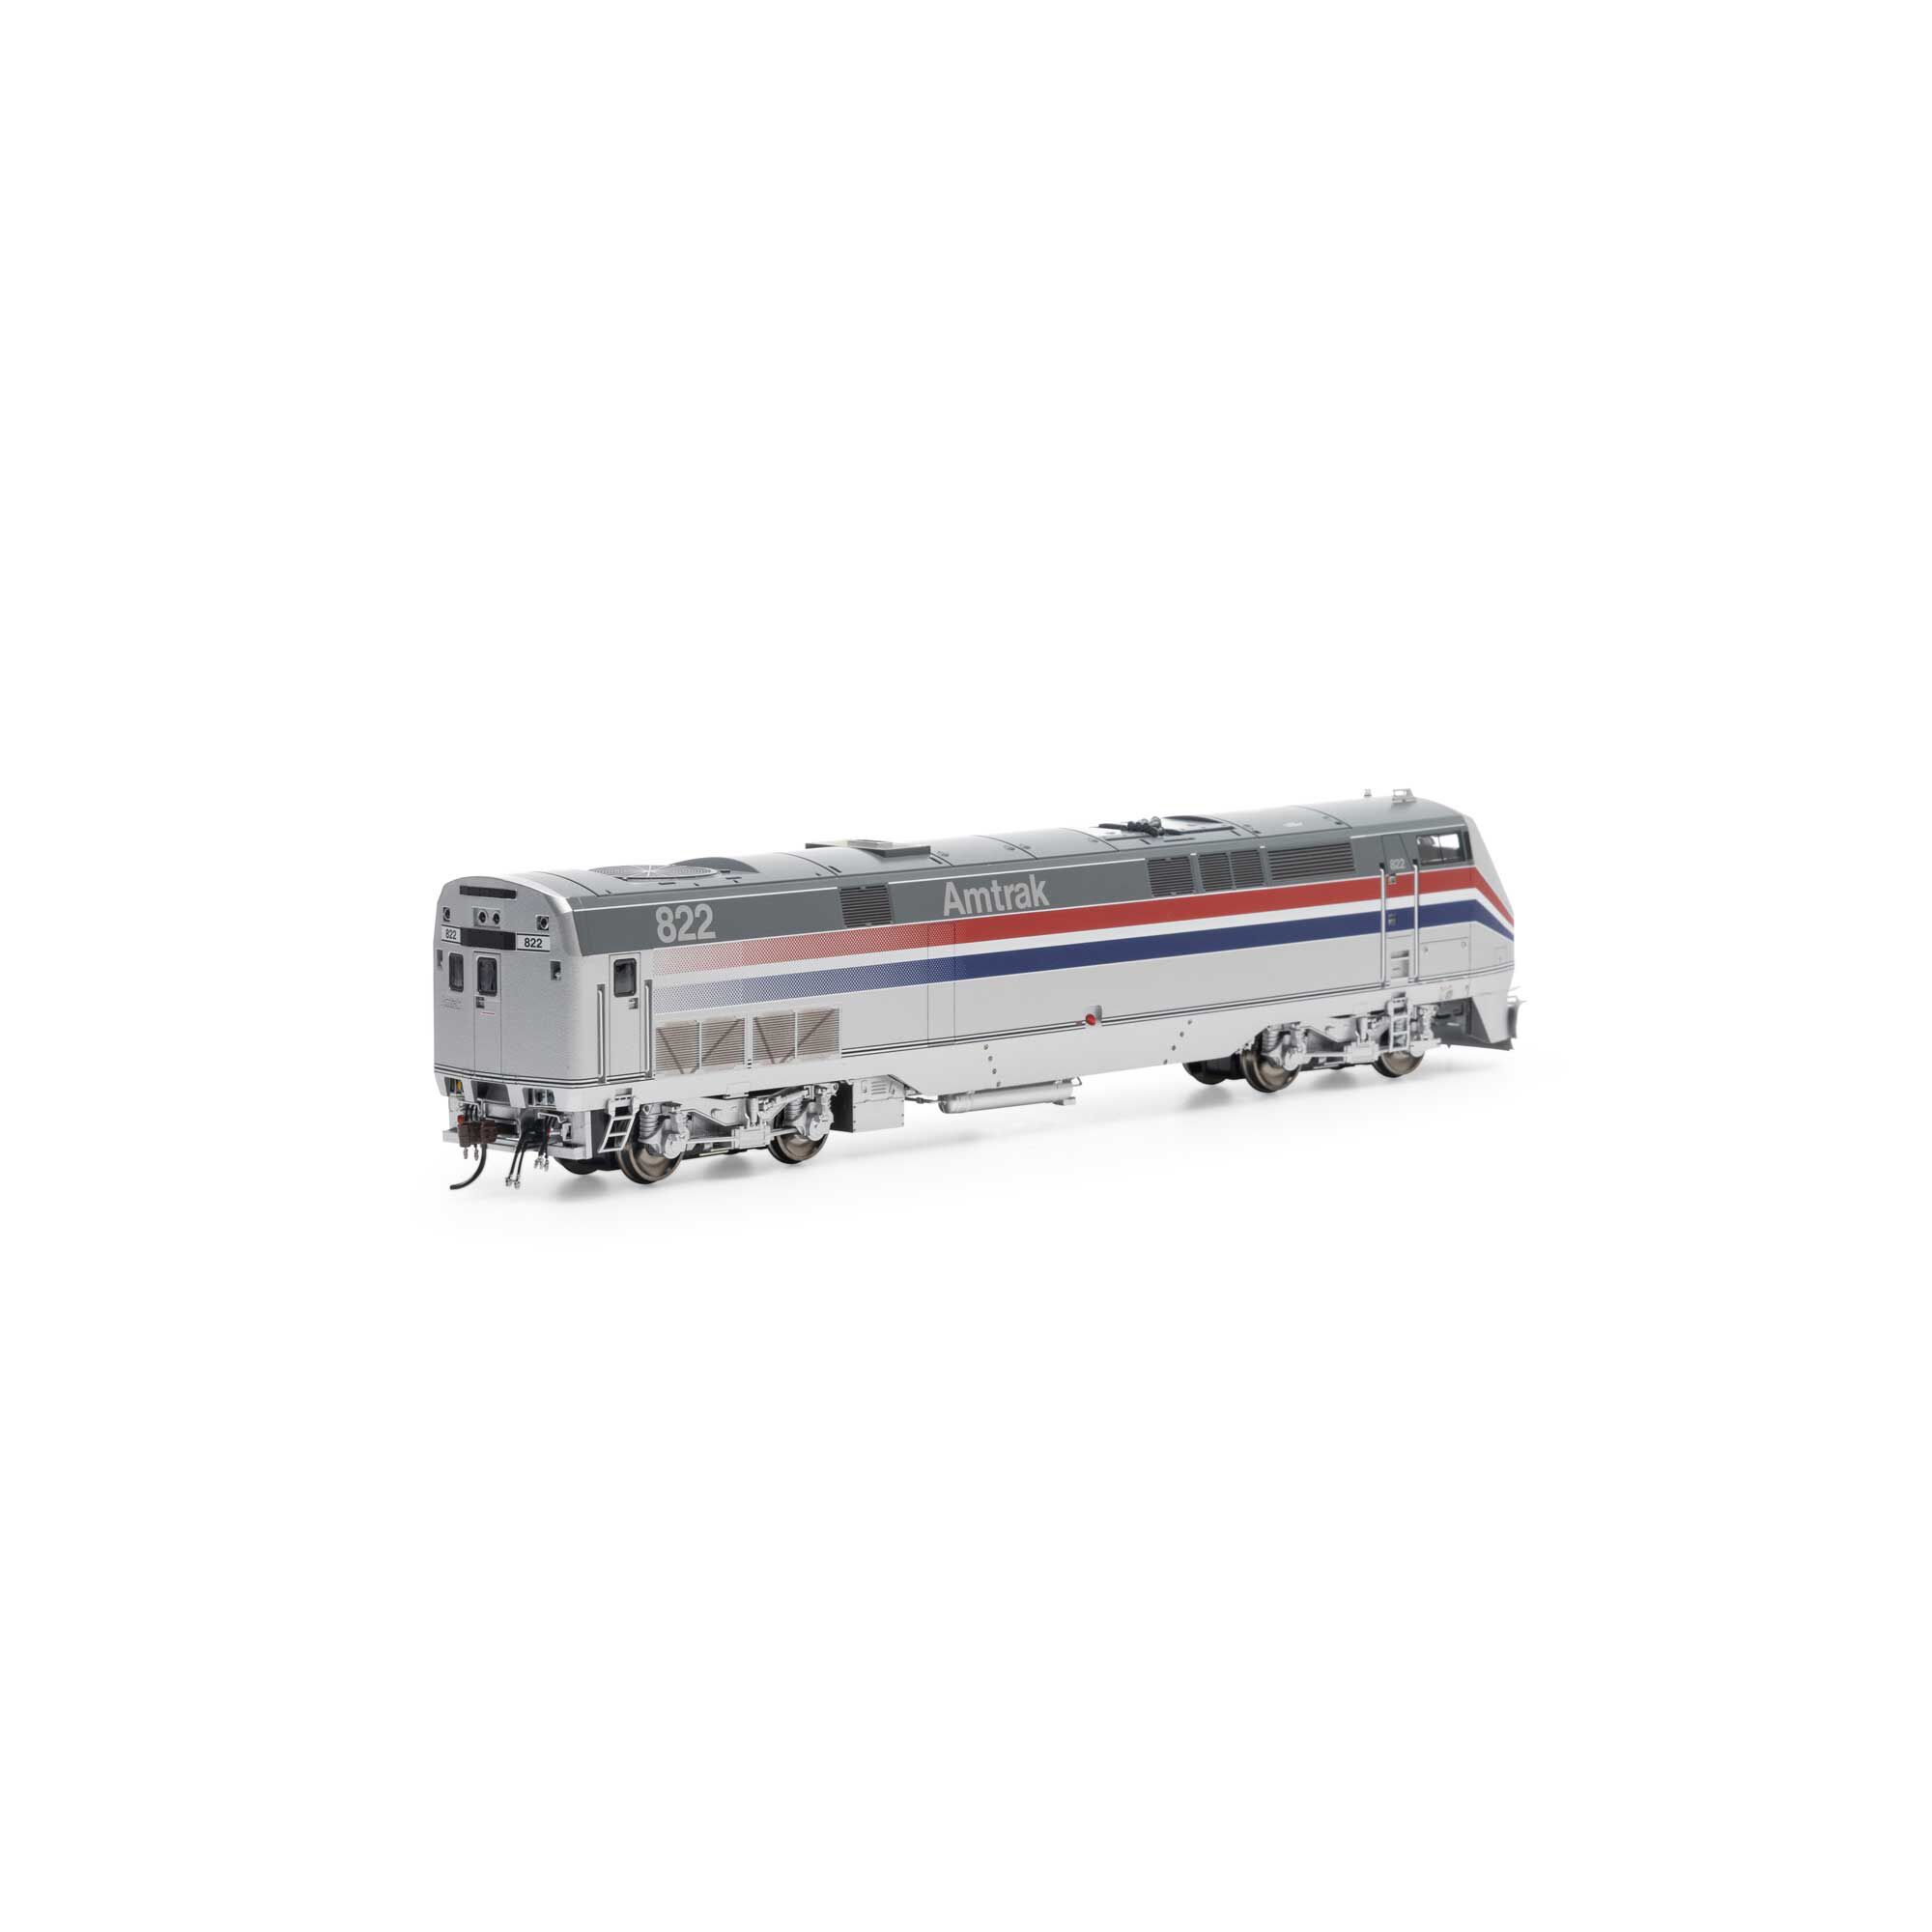 HO P40DC Locomotive with DCC & Sound, Amtrak, Phase III #822 Model 